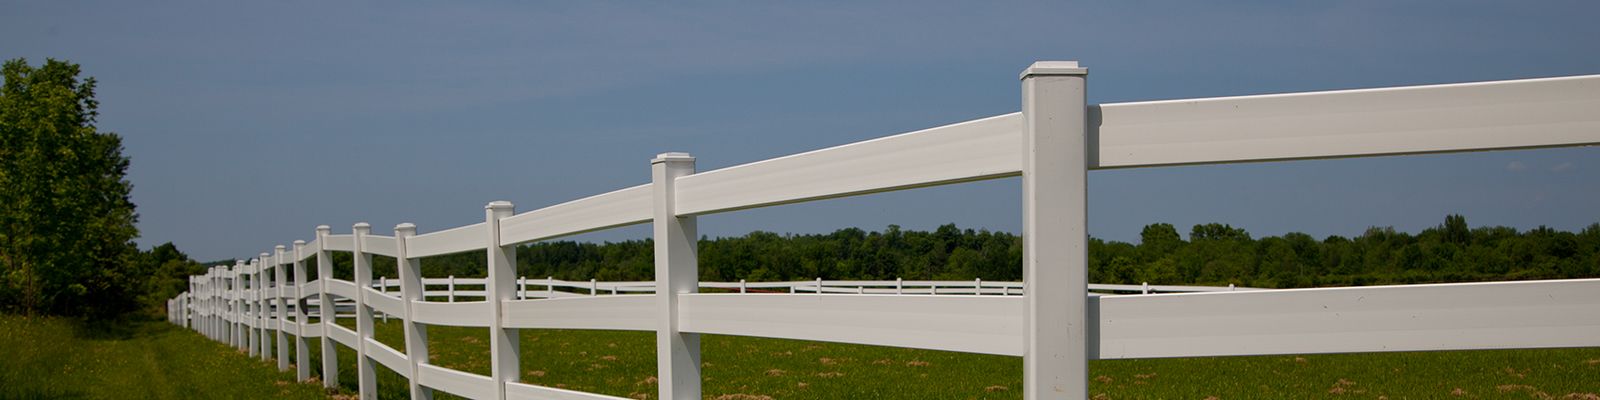 A beautiful white fence keeps horses safe